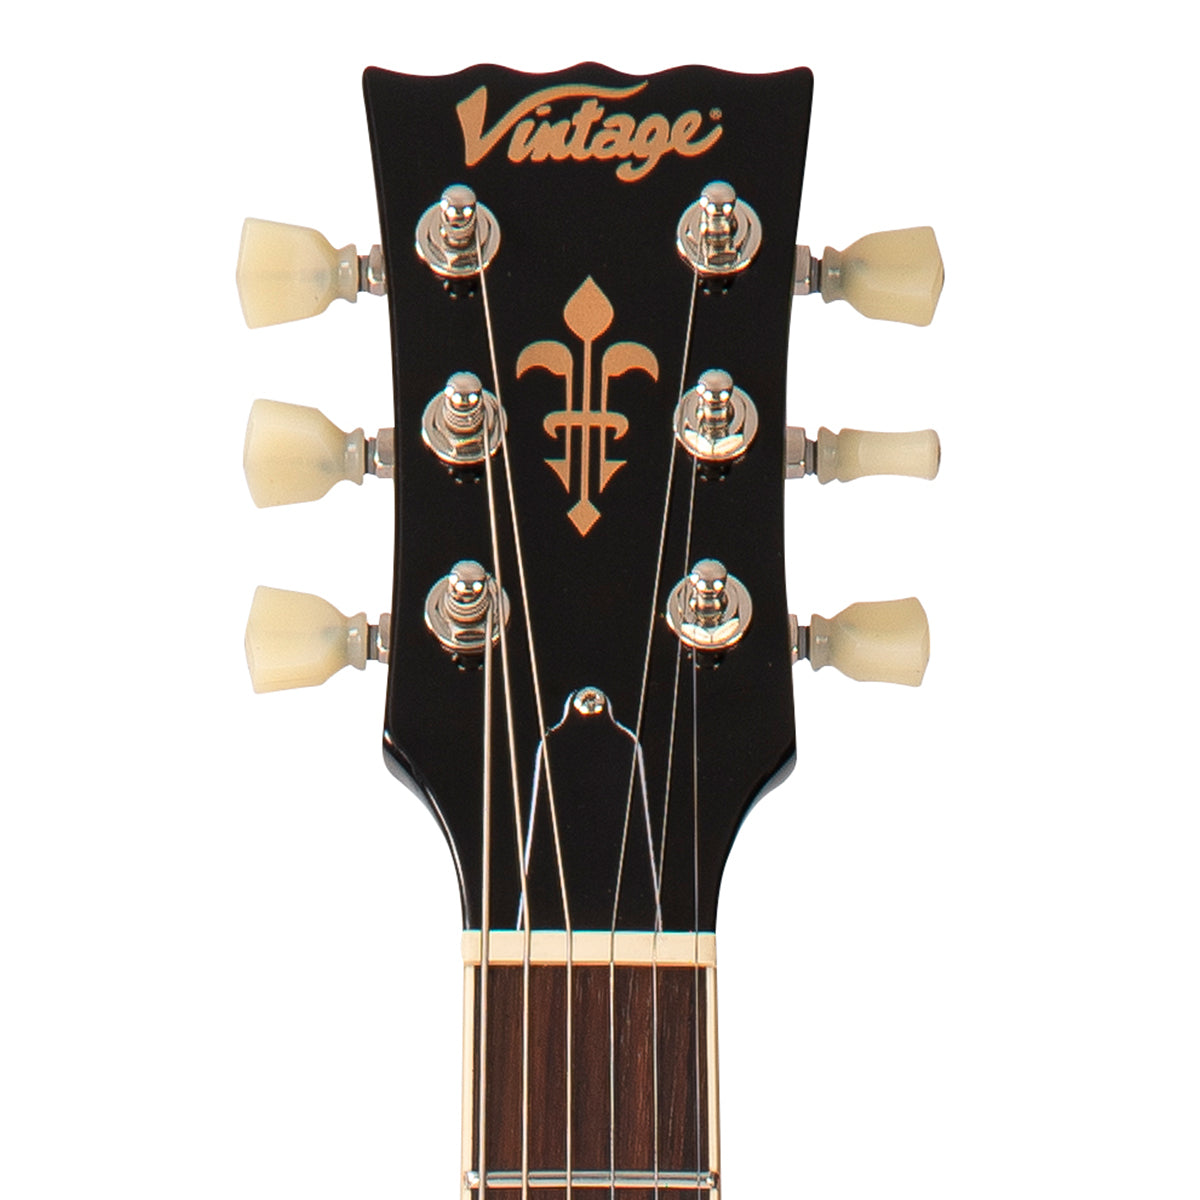 SOLD - Vintage V100 ProShop Unique ~ P.Rail, Electric Guitars for sale at Richards Guitars.